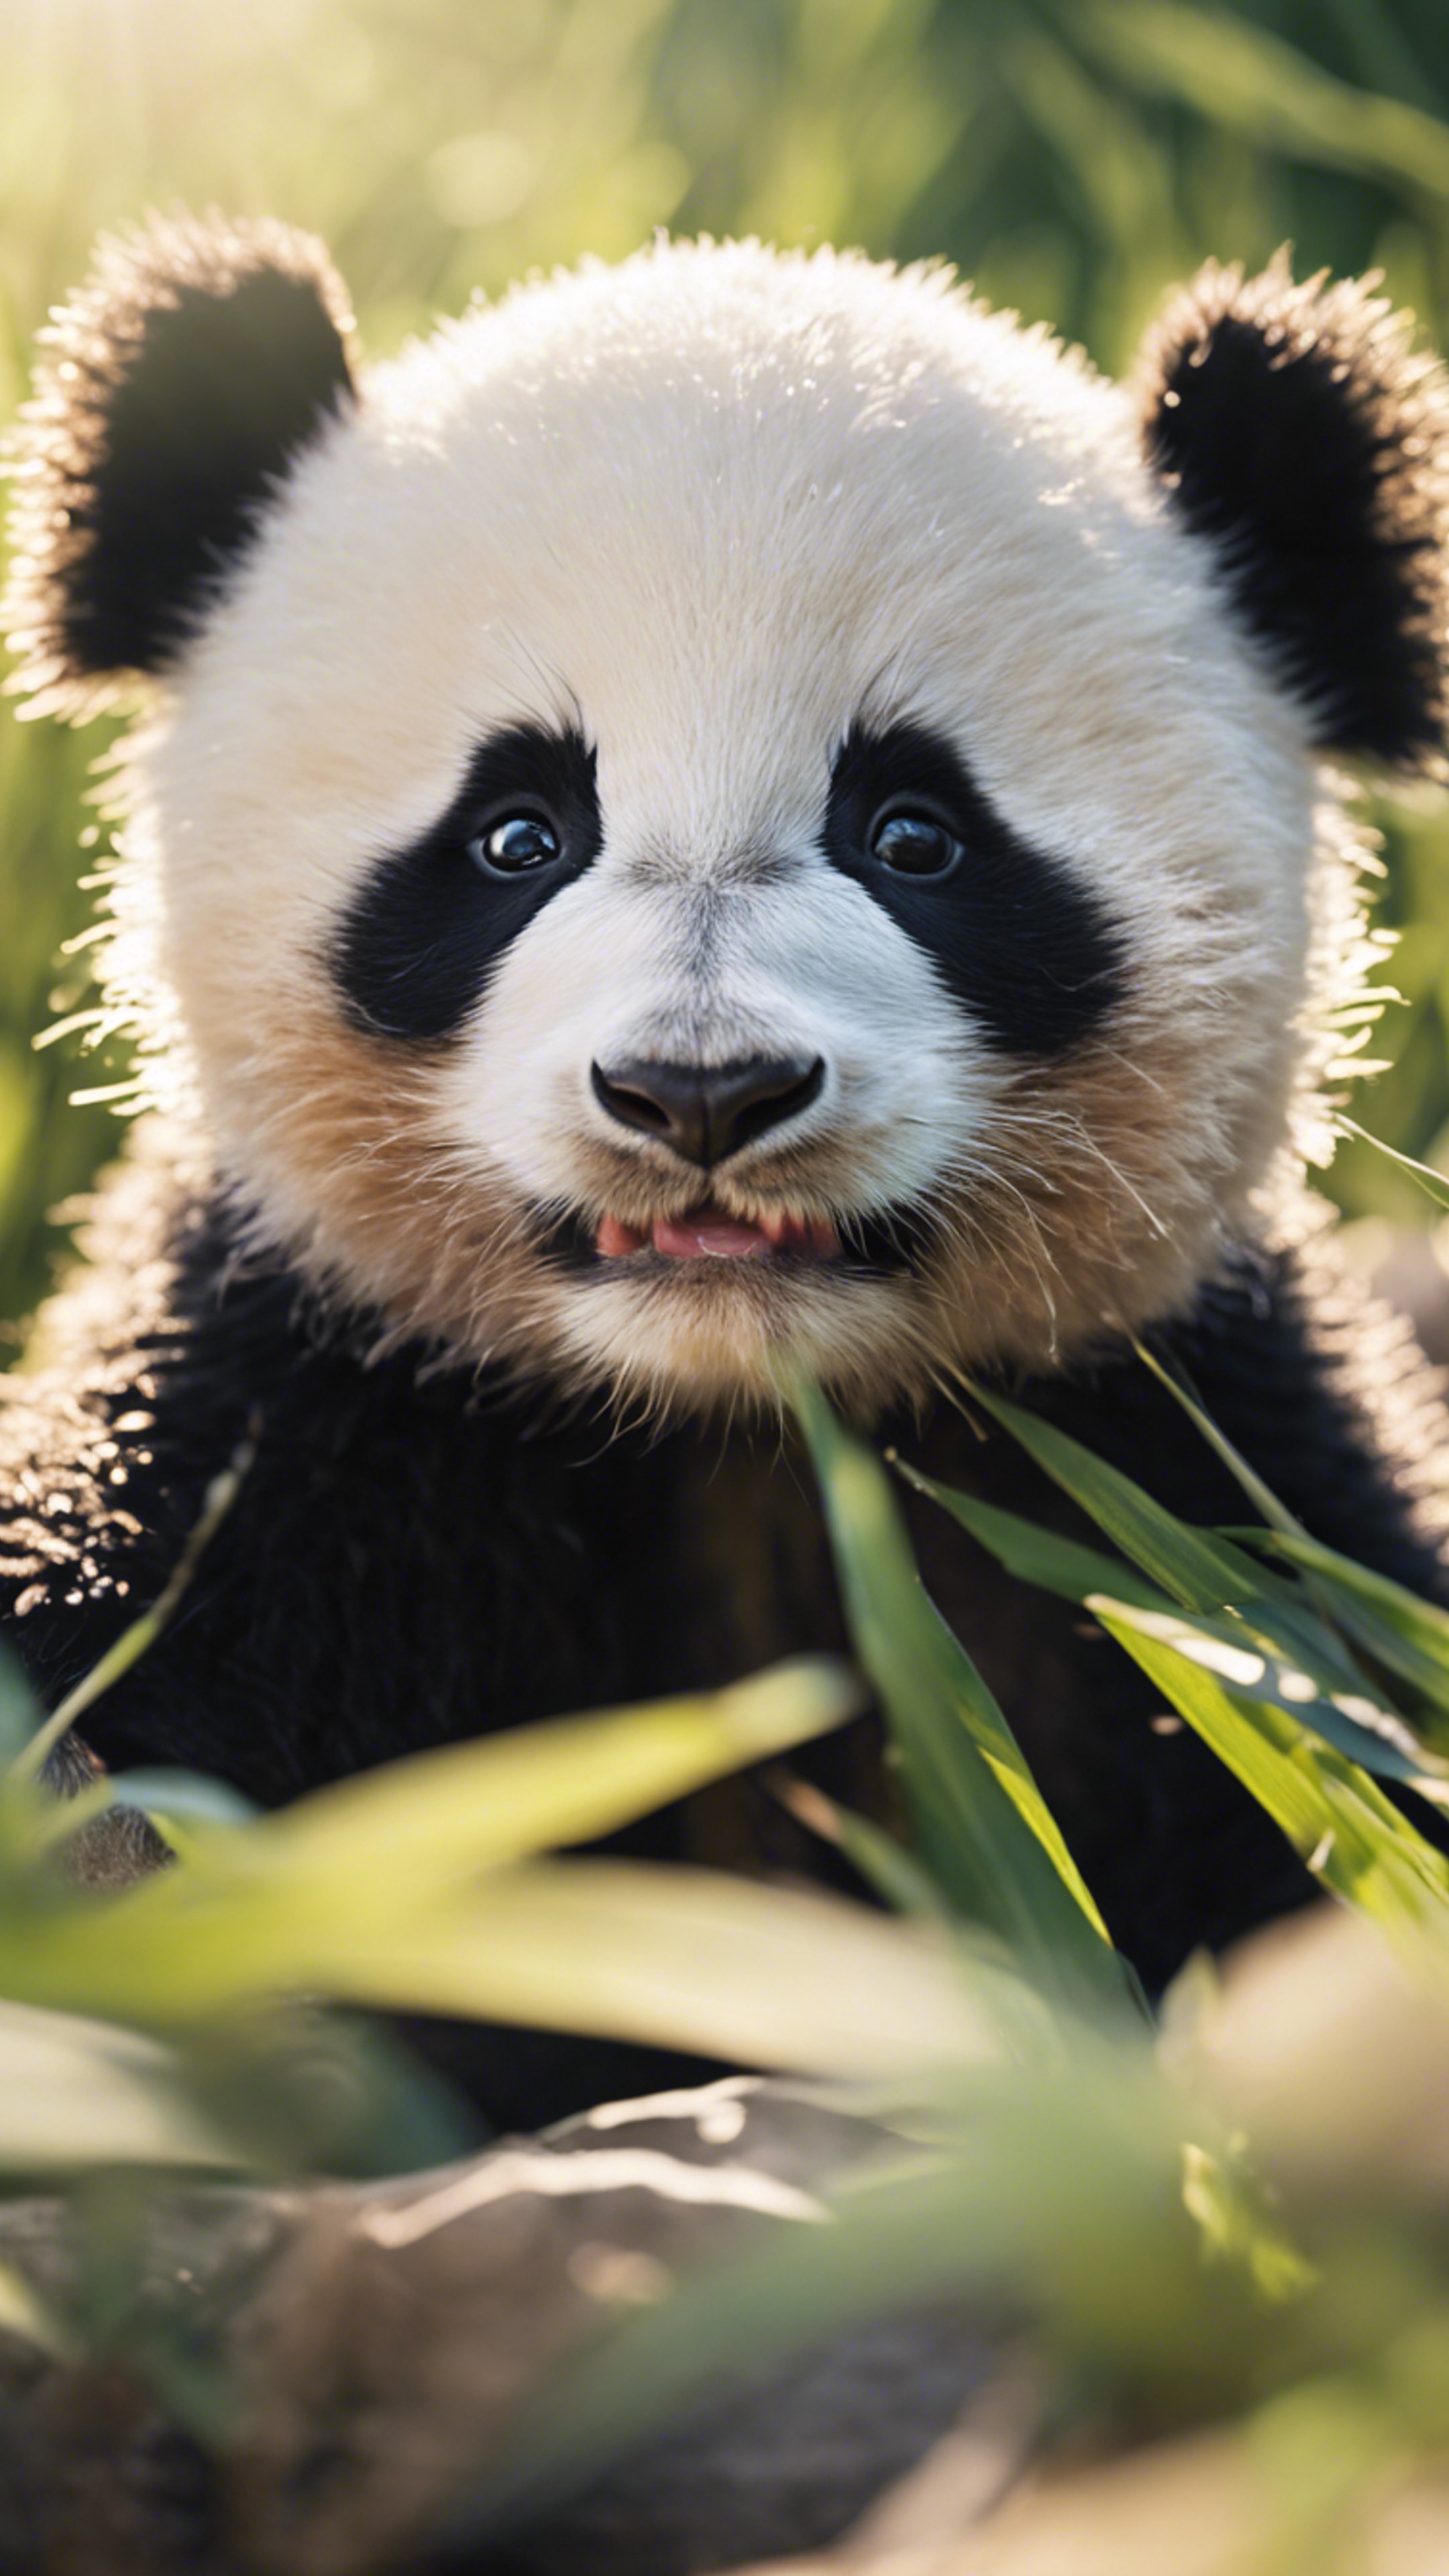 A cheeky panda cub pulling a funny face, under the warm and inviting summer sun. ផ្ទាំង​រូបភាព[260c49d866ff4dc685e3]